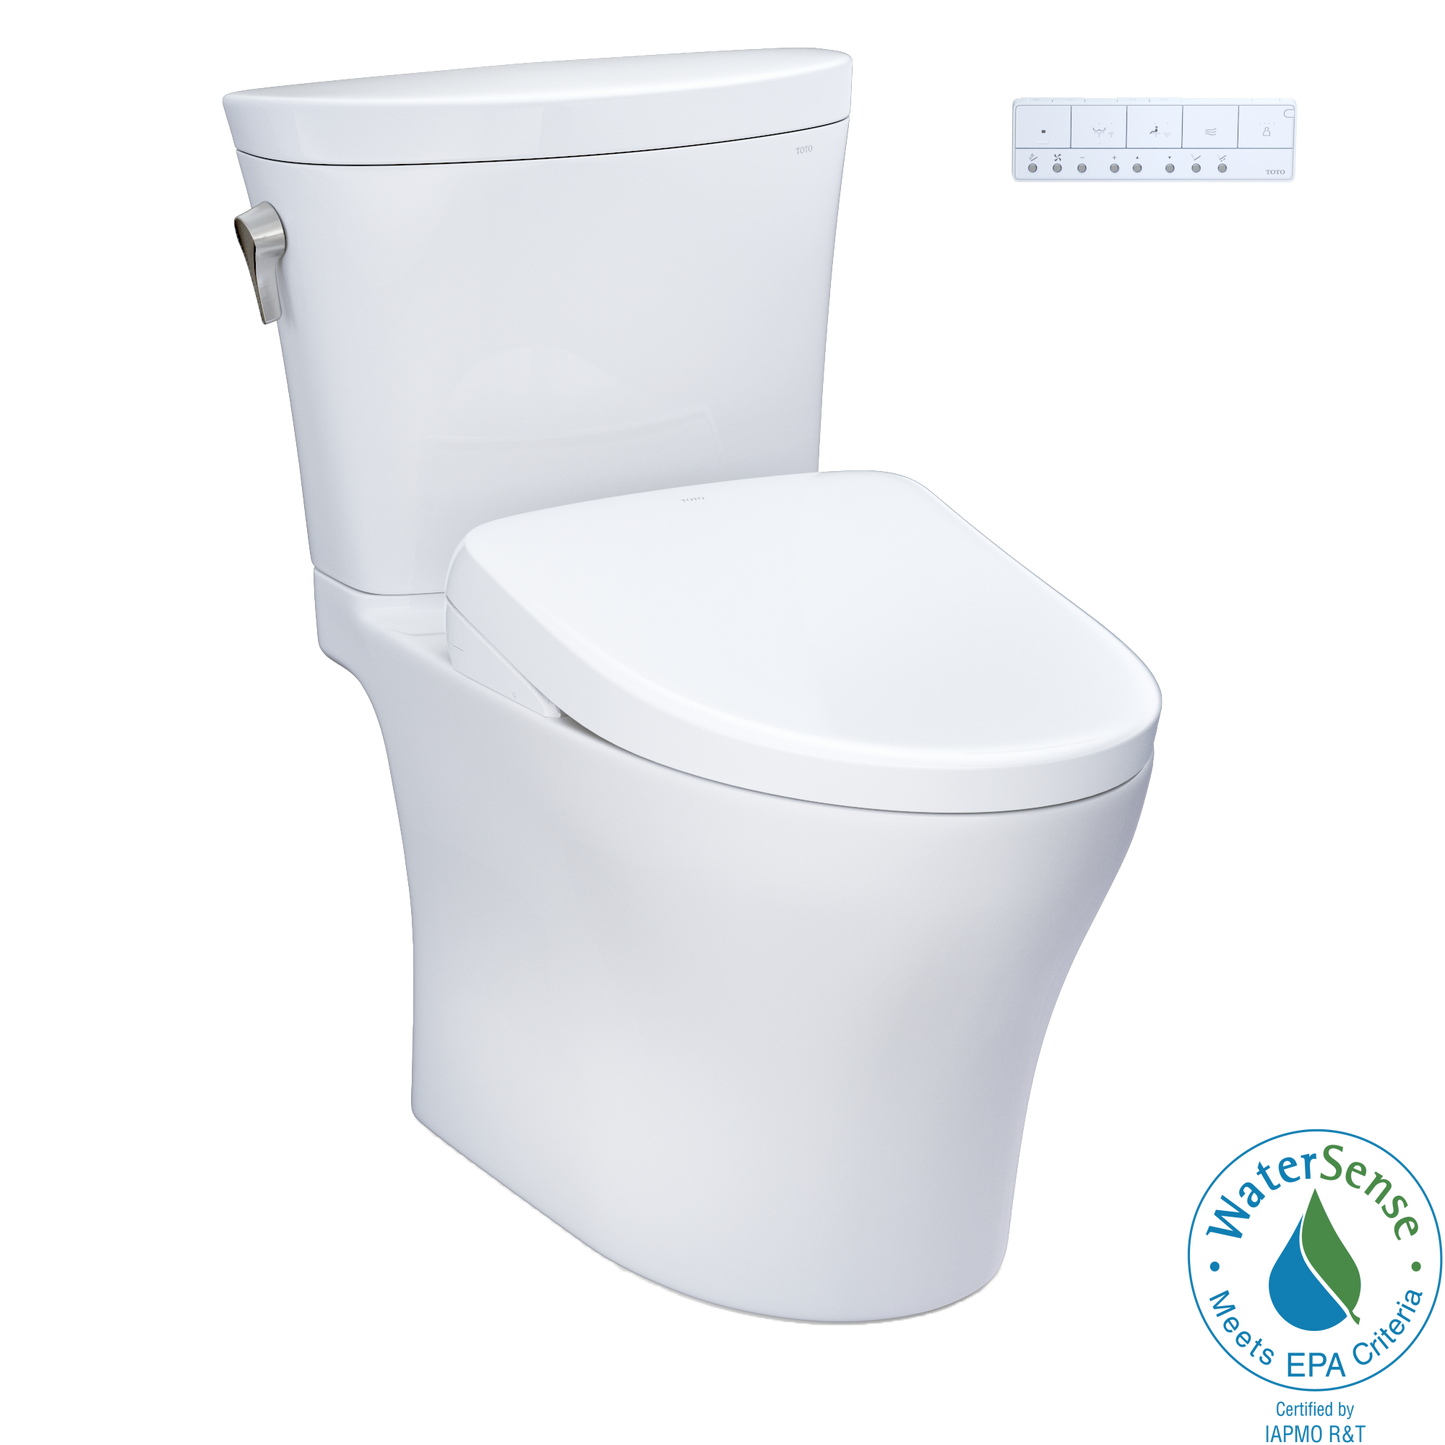 TOTO® WASHLET®+ Aquia IV® Arc Two-Piece Elongated Dual Flush 1.28 and 0.9 GPF Toilet with Auto Flush S7 Contemporary Bidet Seat, Cotton White - MW4484726CEMFGNA#01